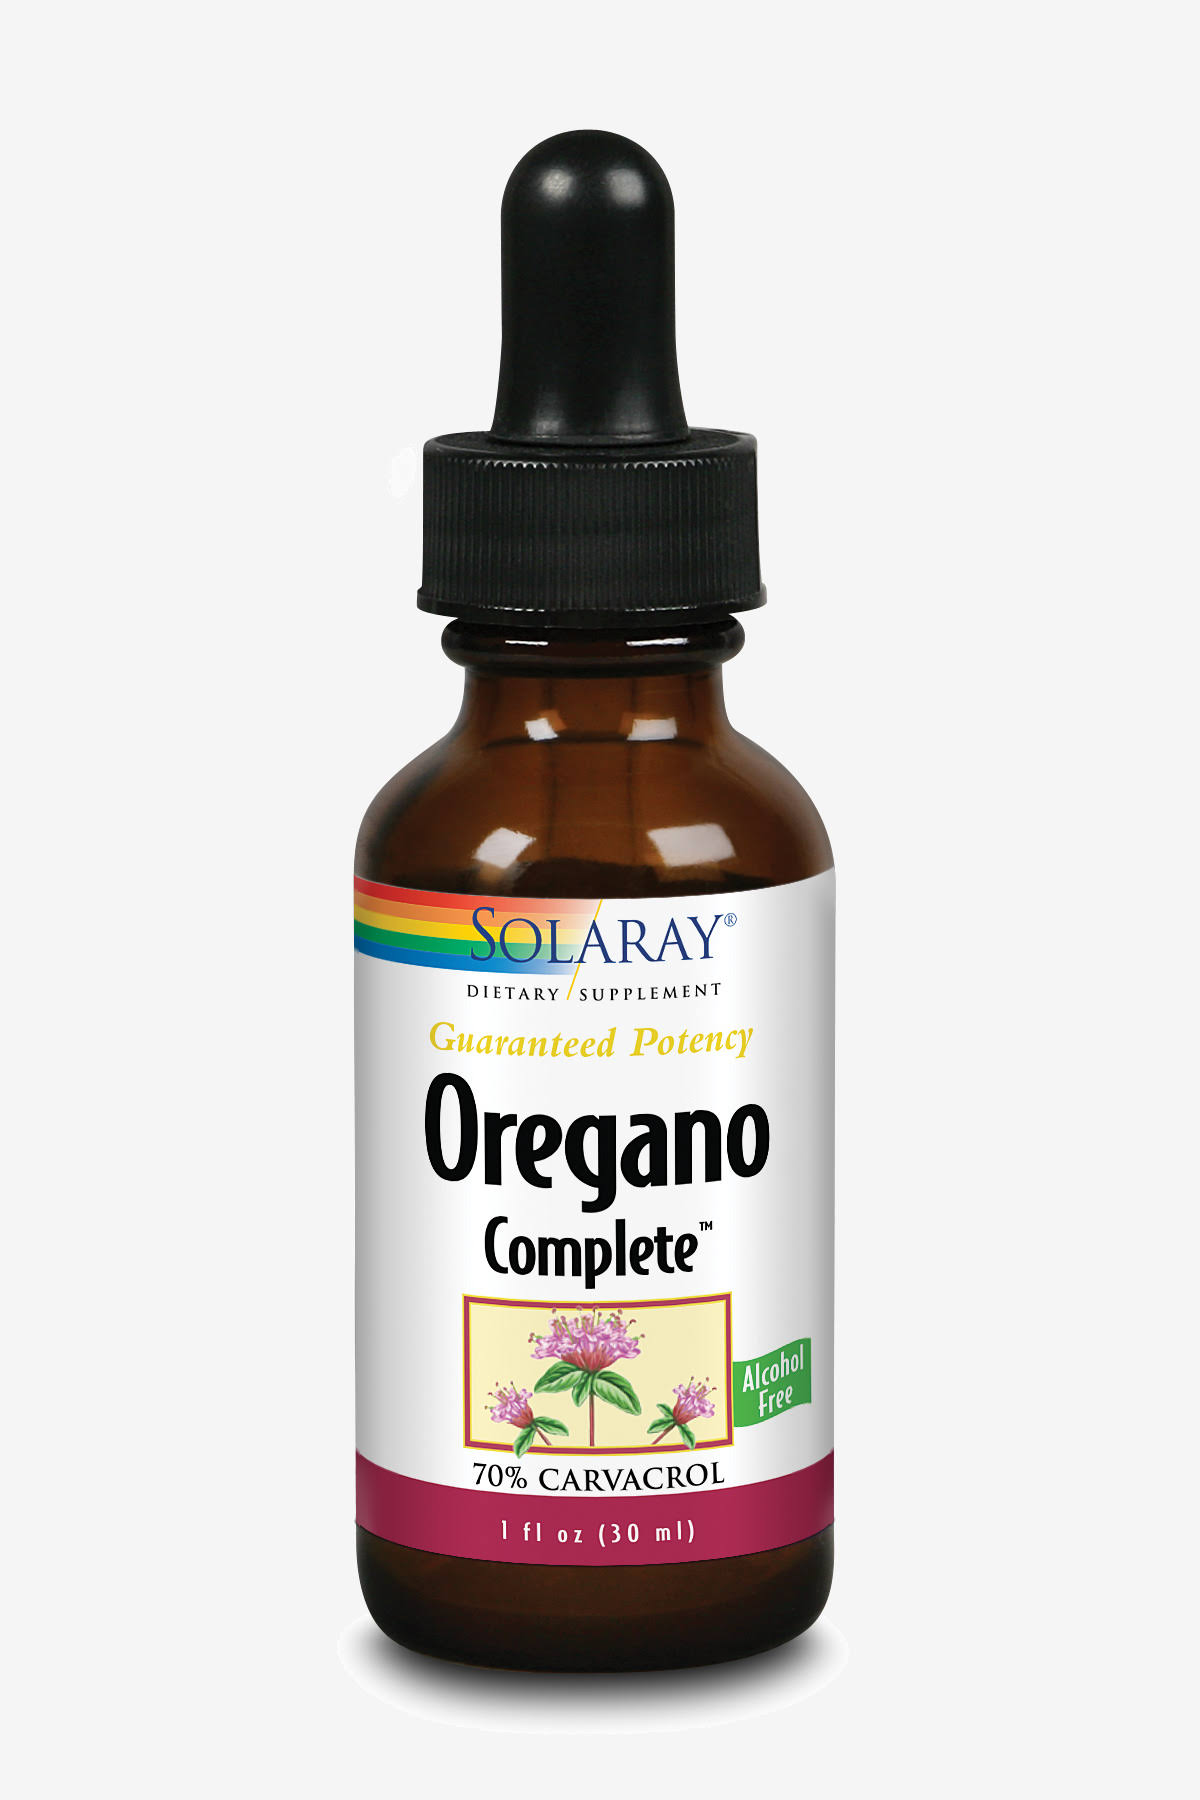 Solaray Oregano Complete Liquid - 30ml